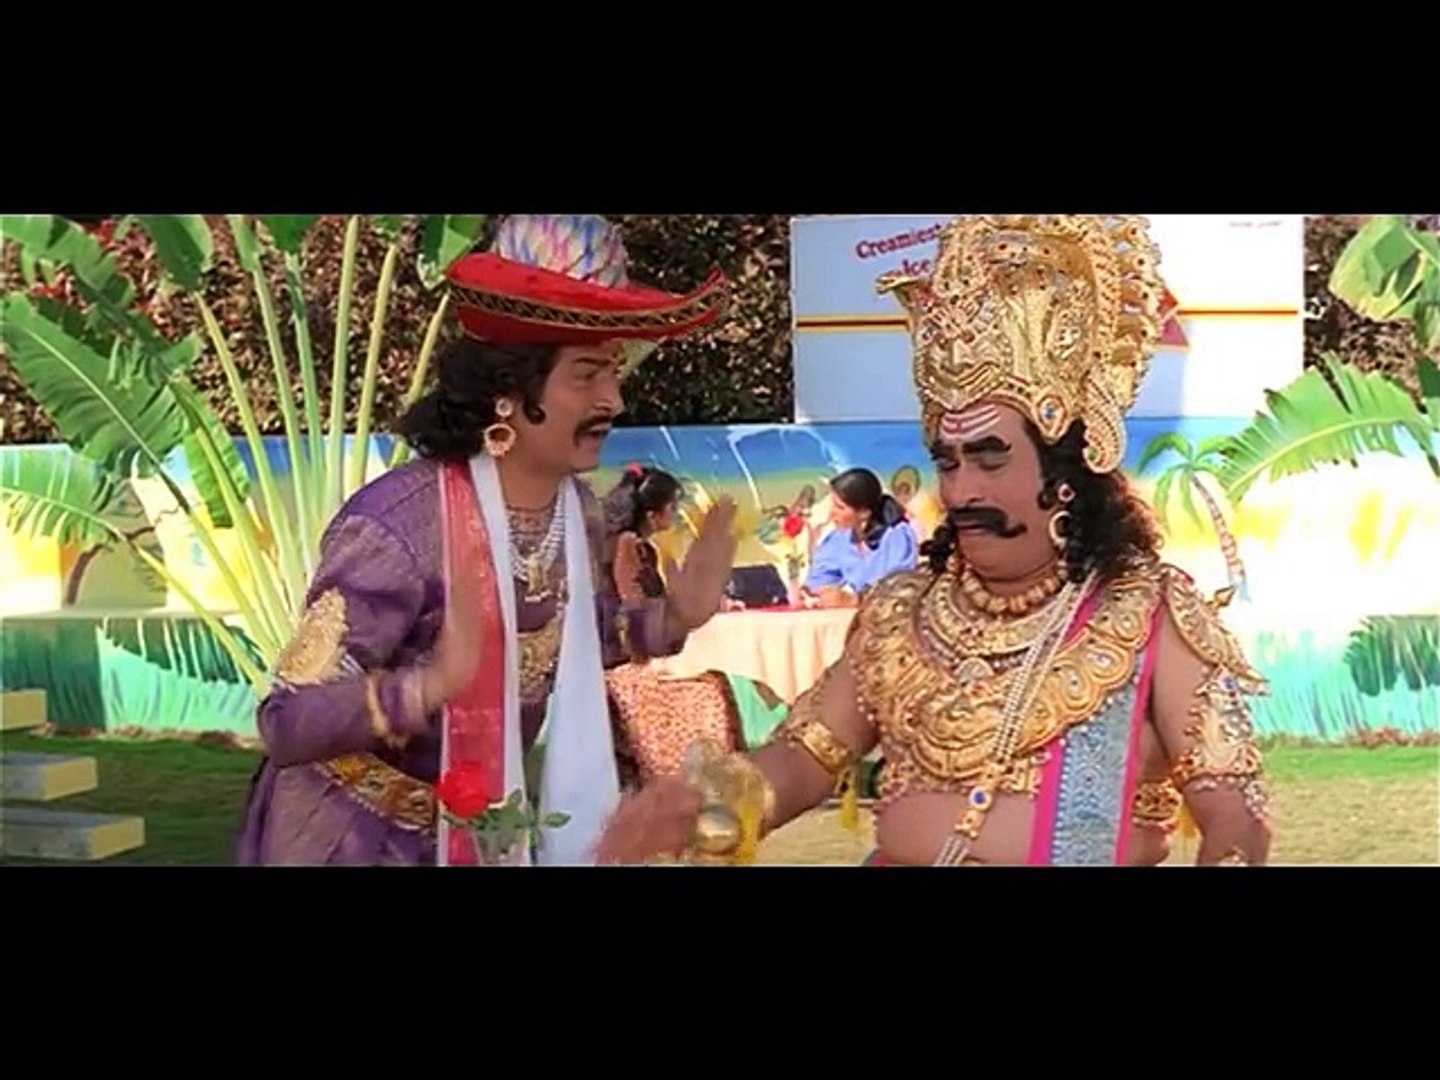 Hindi Comedy Movies   Comedy Kings JukeBox Vol 1   Akshay Kumar   Comedy Movies   Comedy Scenes